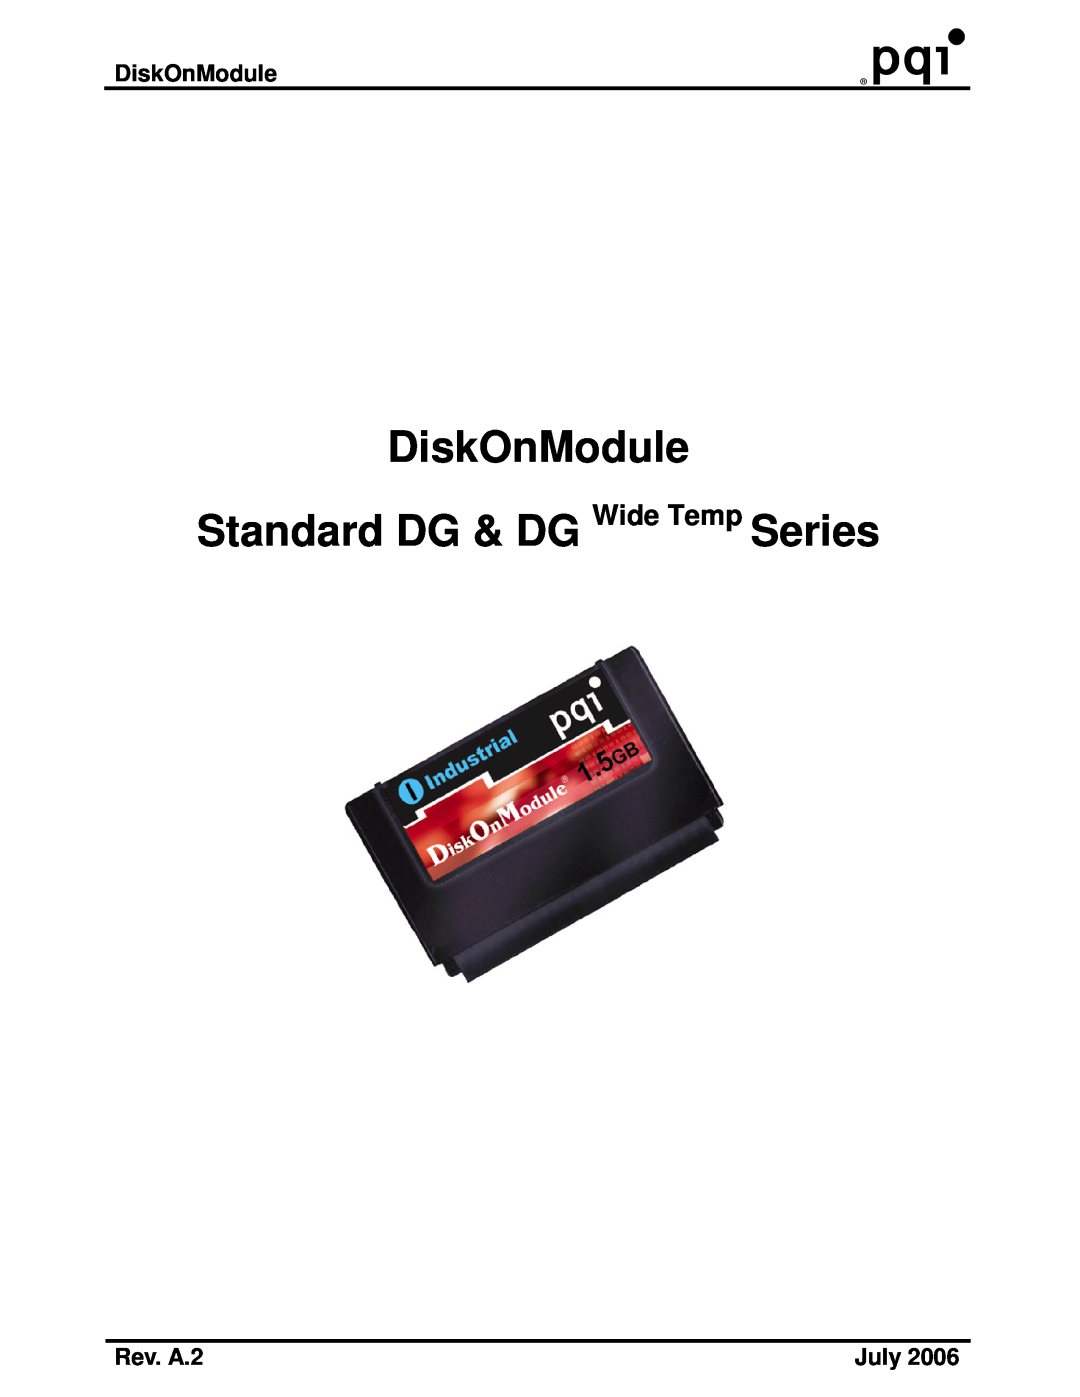 PQI manual Rev. A.2, July, DiskOnModule Standard DG & DG Wide Temp Series 